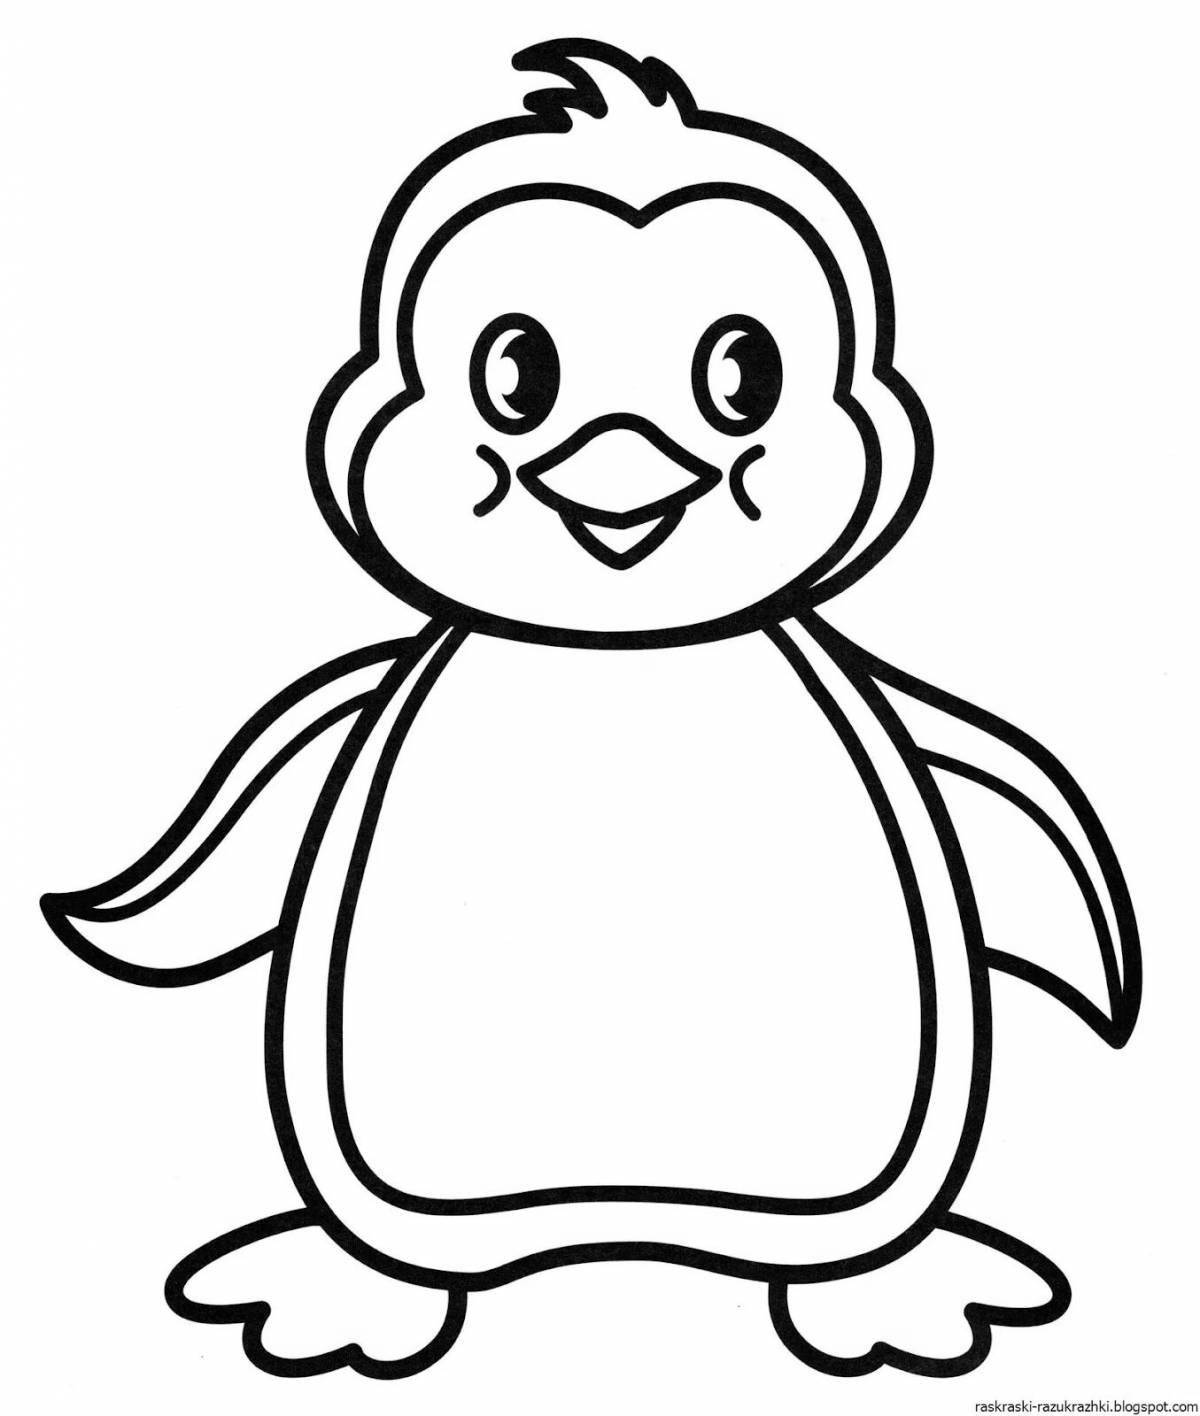 Penguin drawing for kids #4